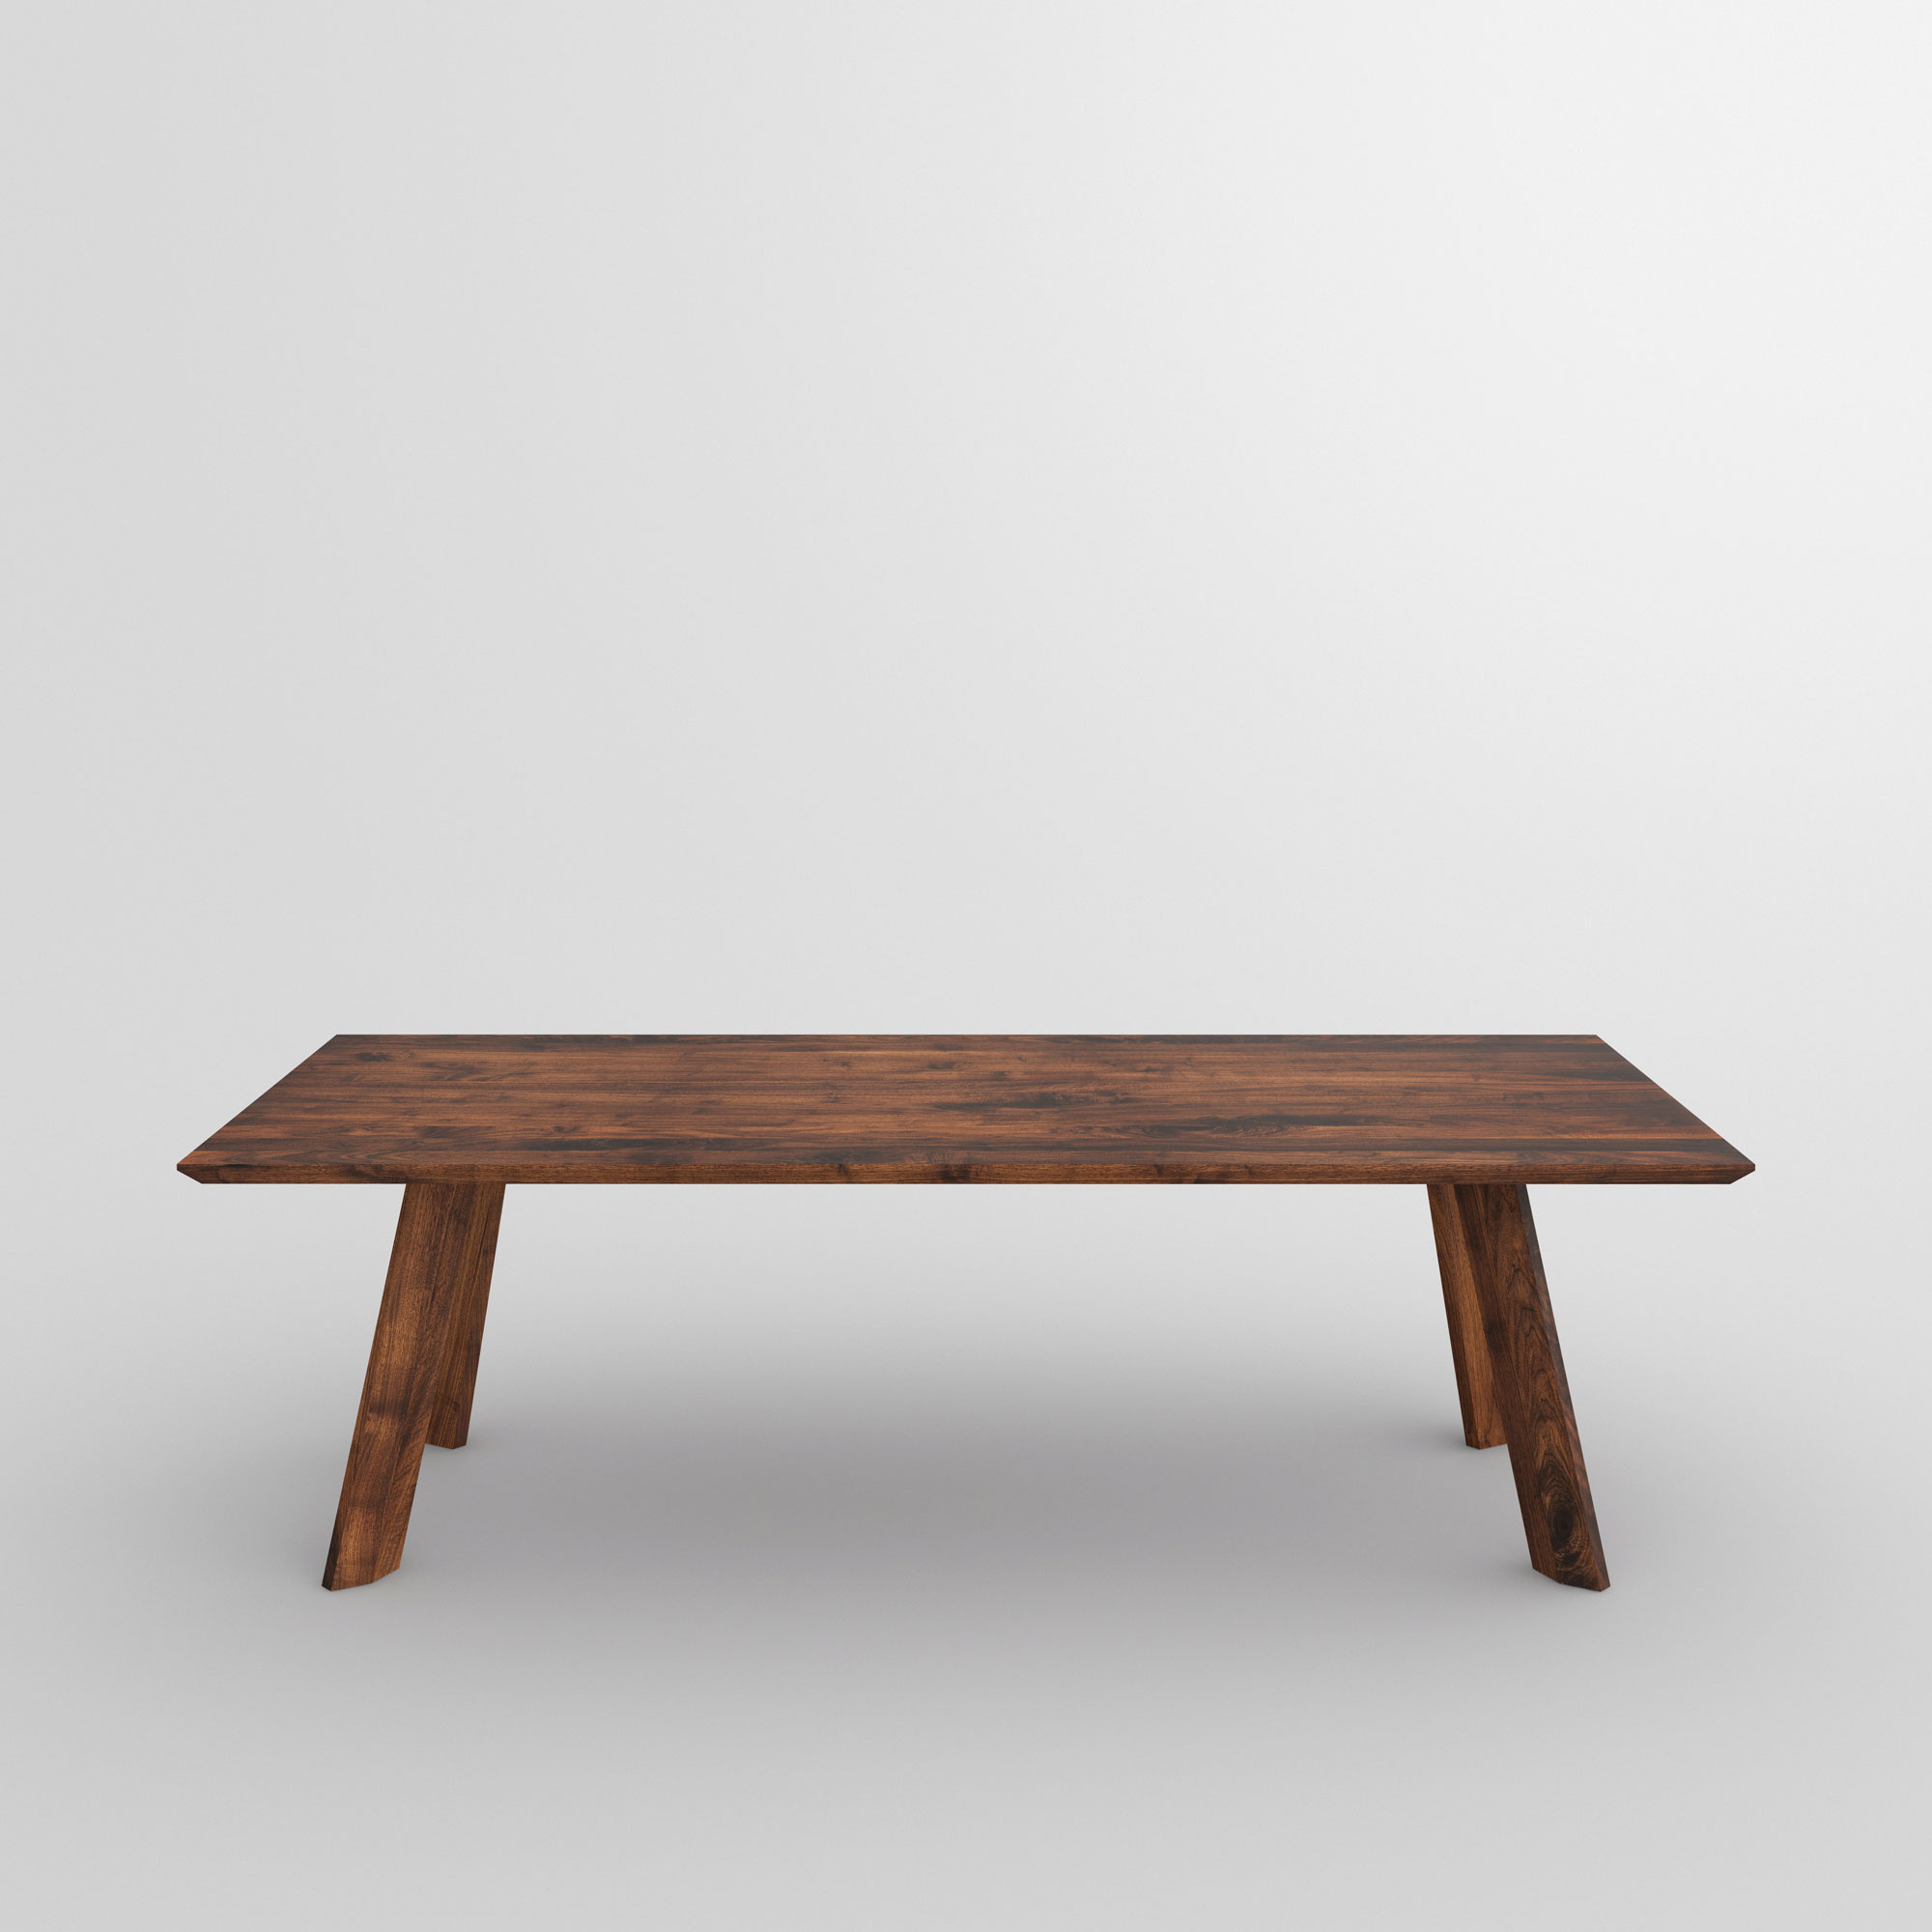 Designer Living Room Table RHOMBI BASIC cam3 custom made in solid wood by vitamin design